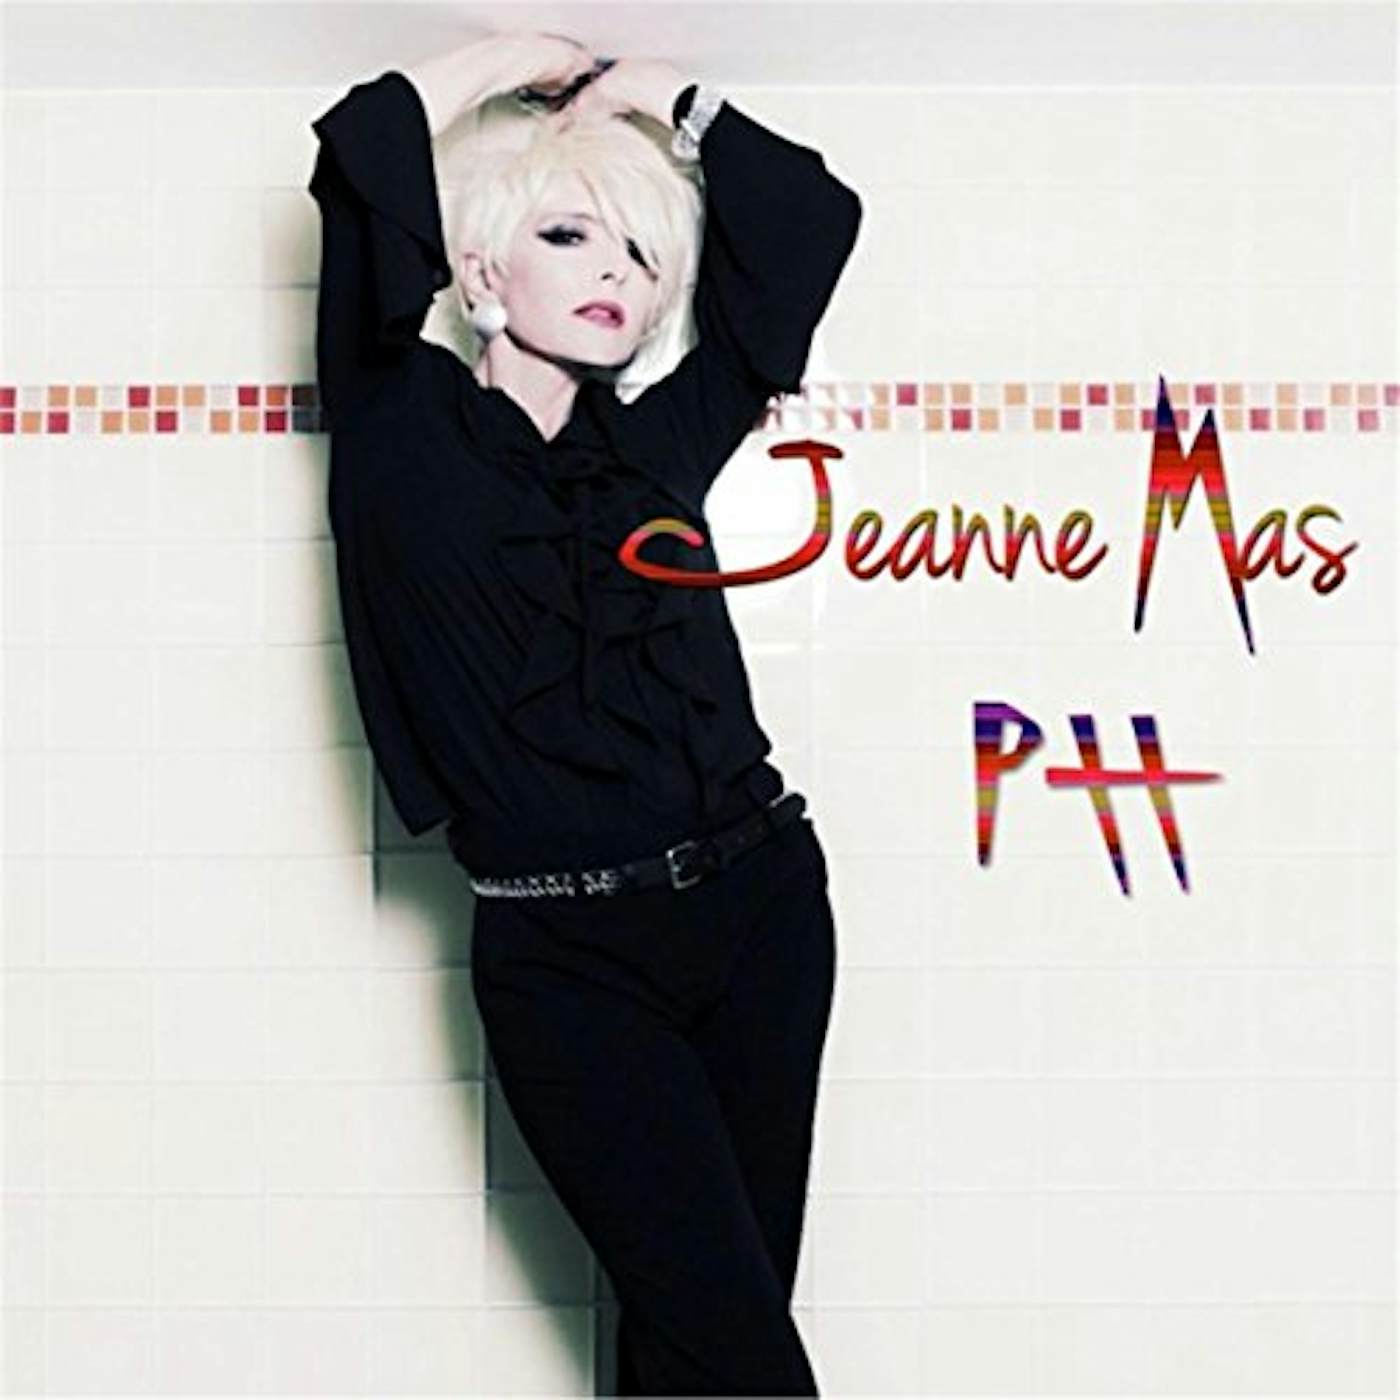 Jeanne Mas PH CD